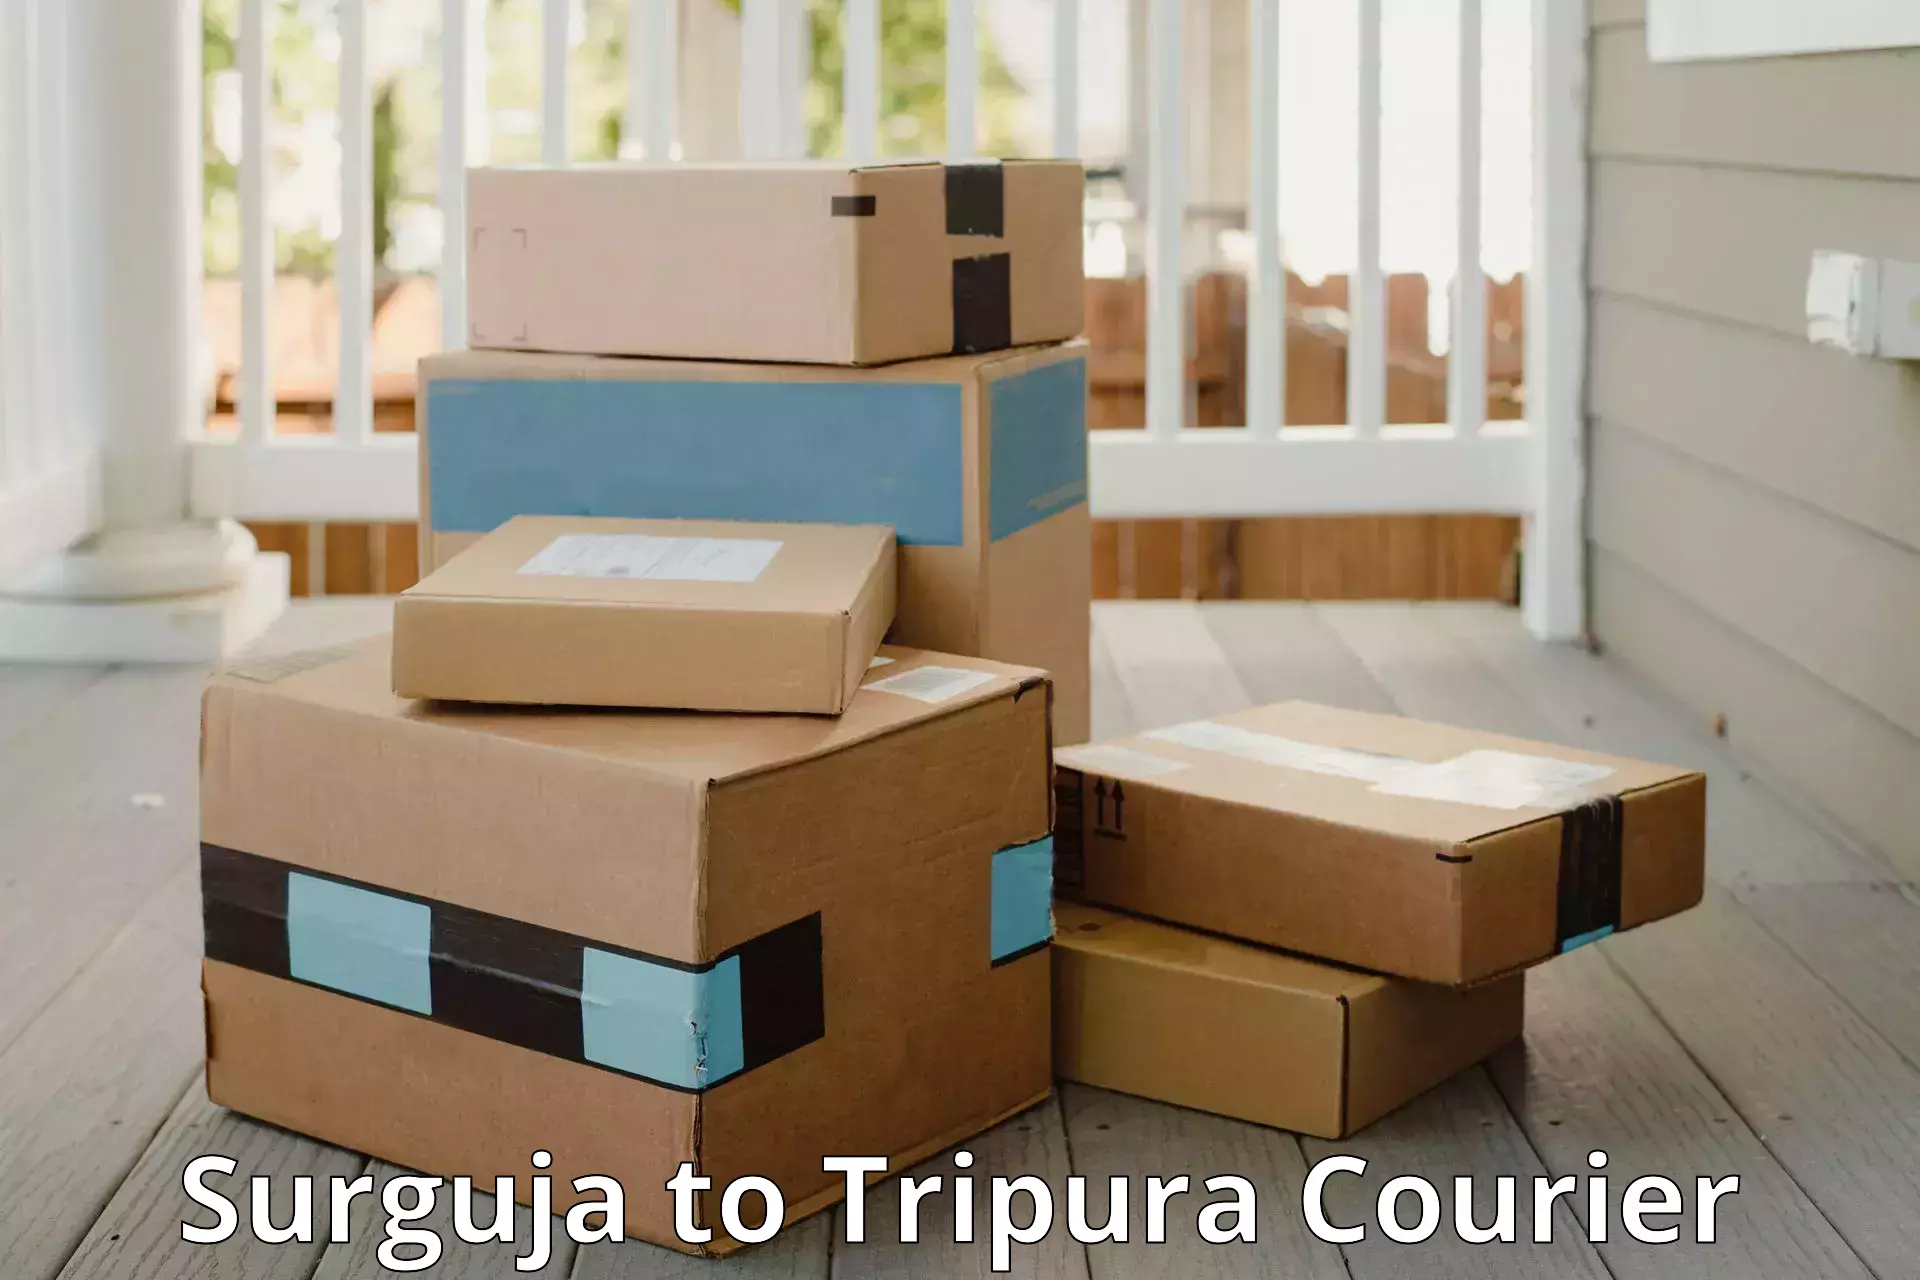 Doorstep luggage pickup Surguja to Udaipur Tripura